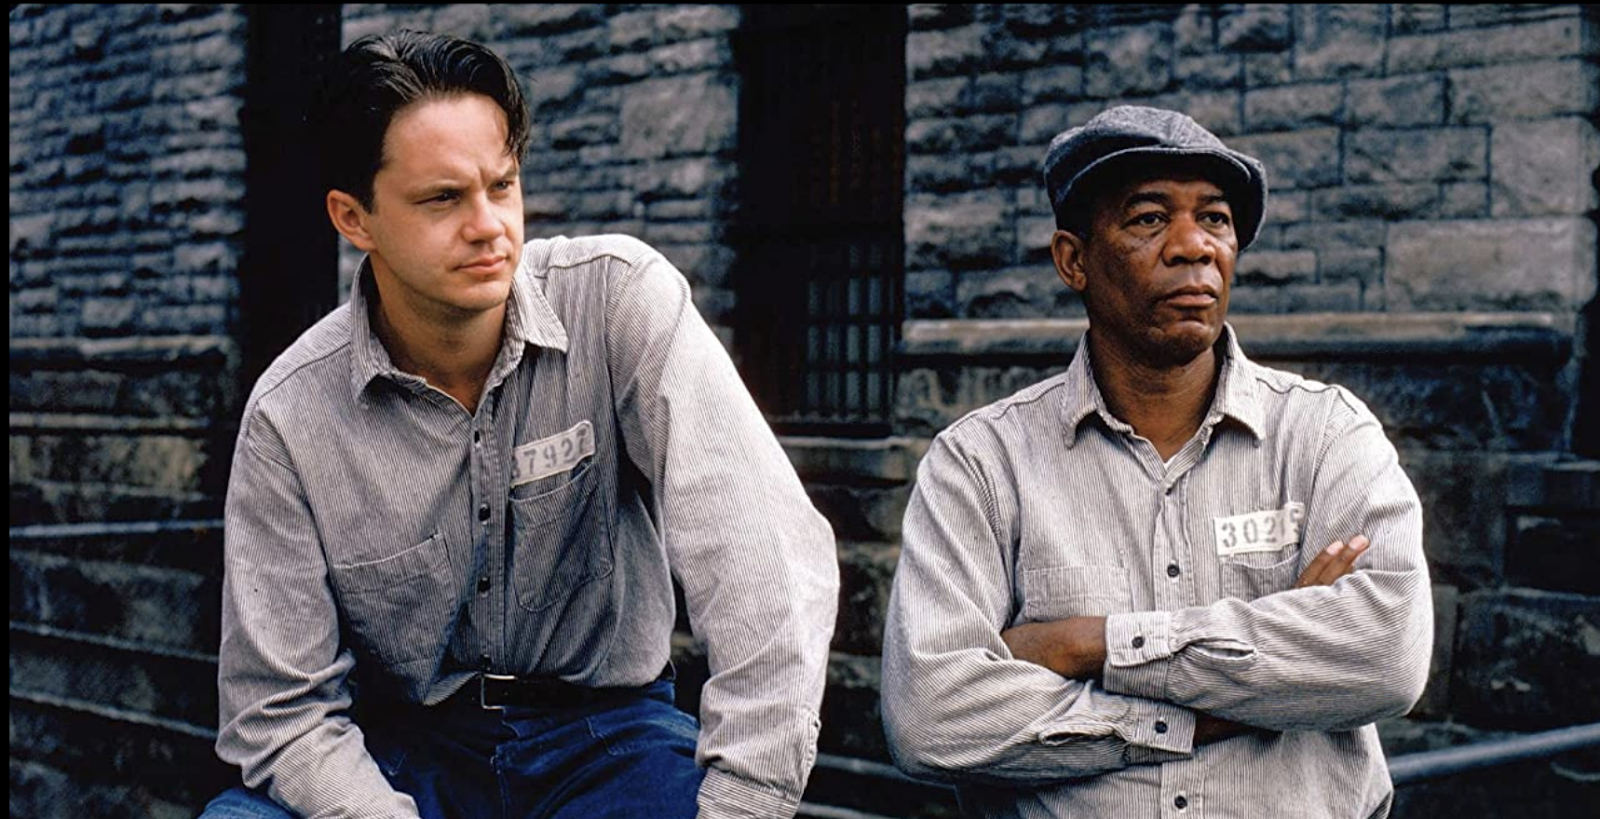 Tim Robbins as Andy Dufresne and Morgan Freeman as Ellis Boyd “Red” Redding at the Shawshank Filming Location in Ohio